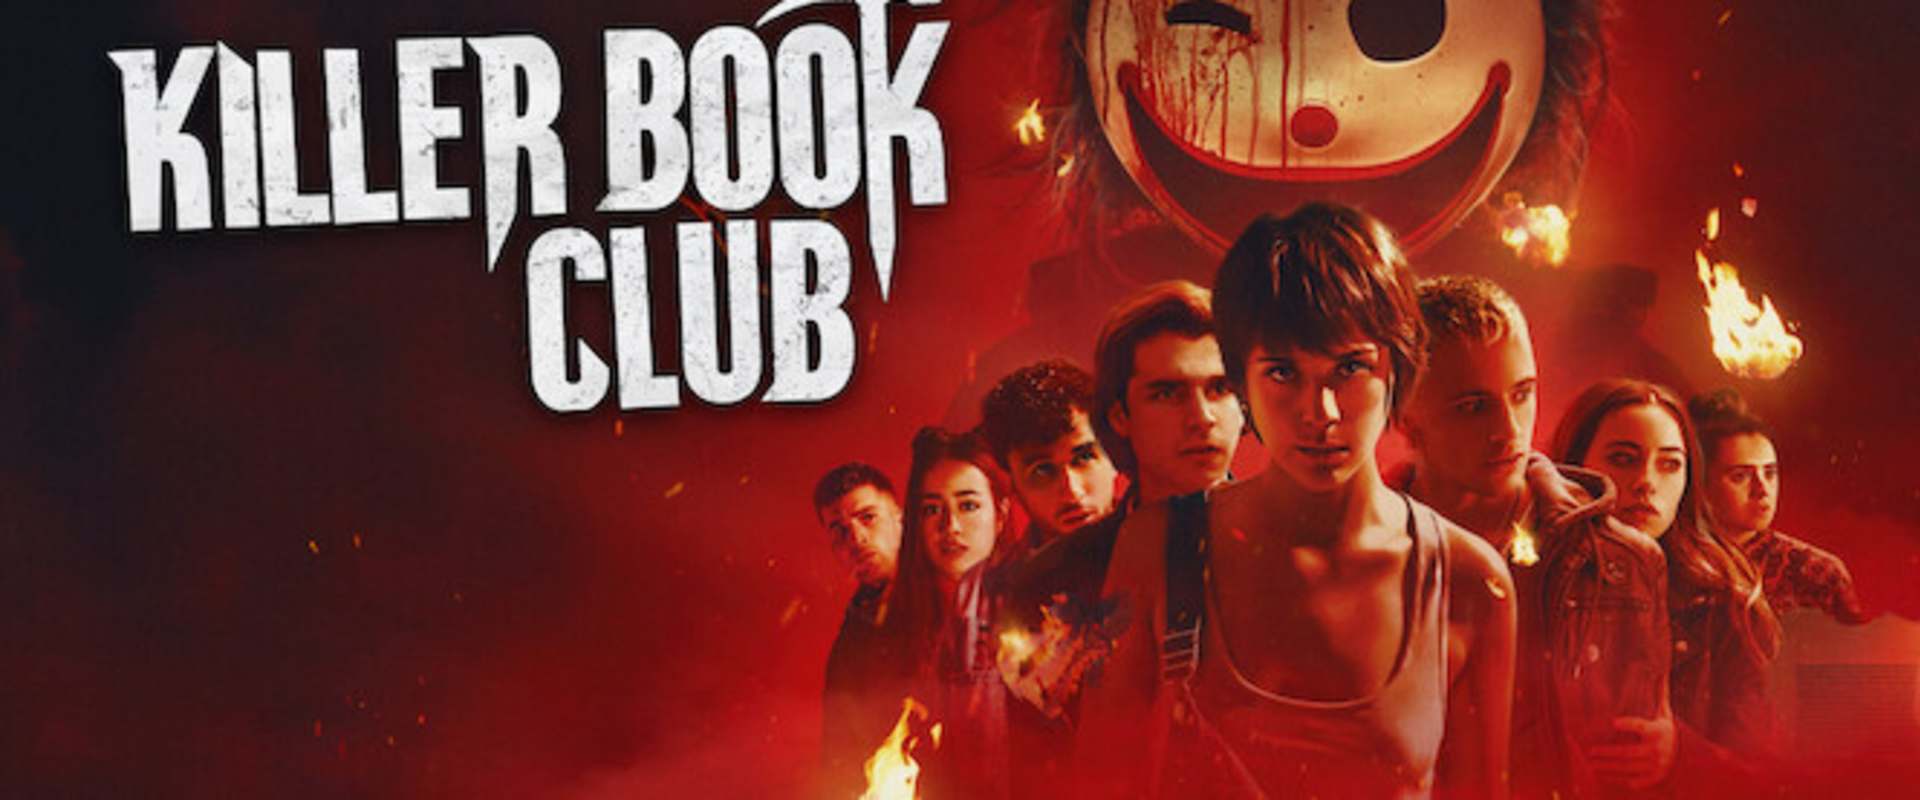 Killer Book Club background 1